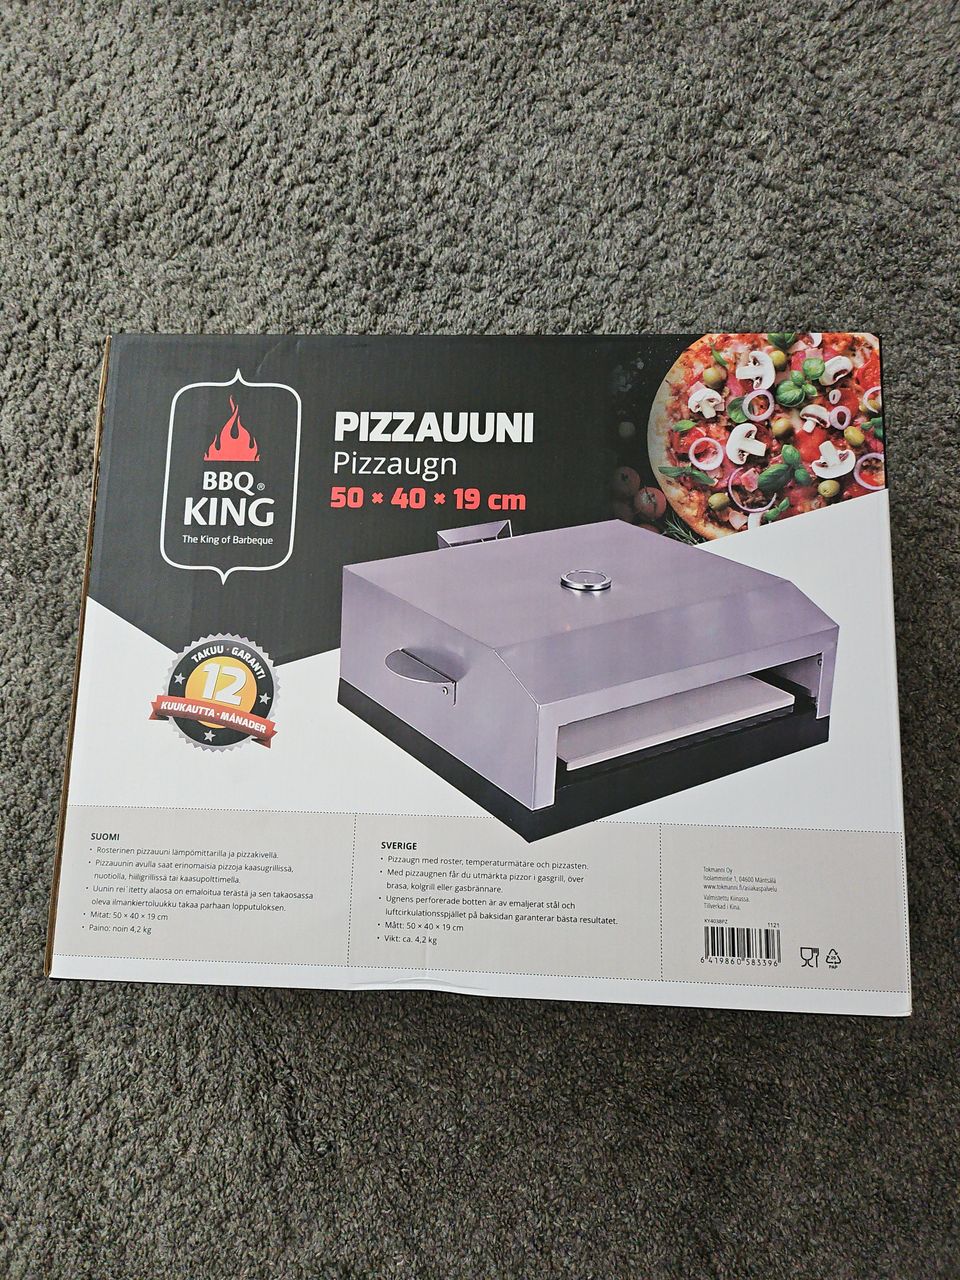 Uusi BBG King pizzauuni